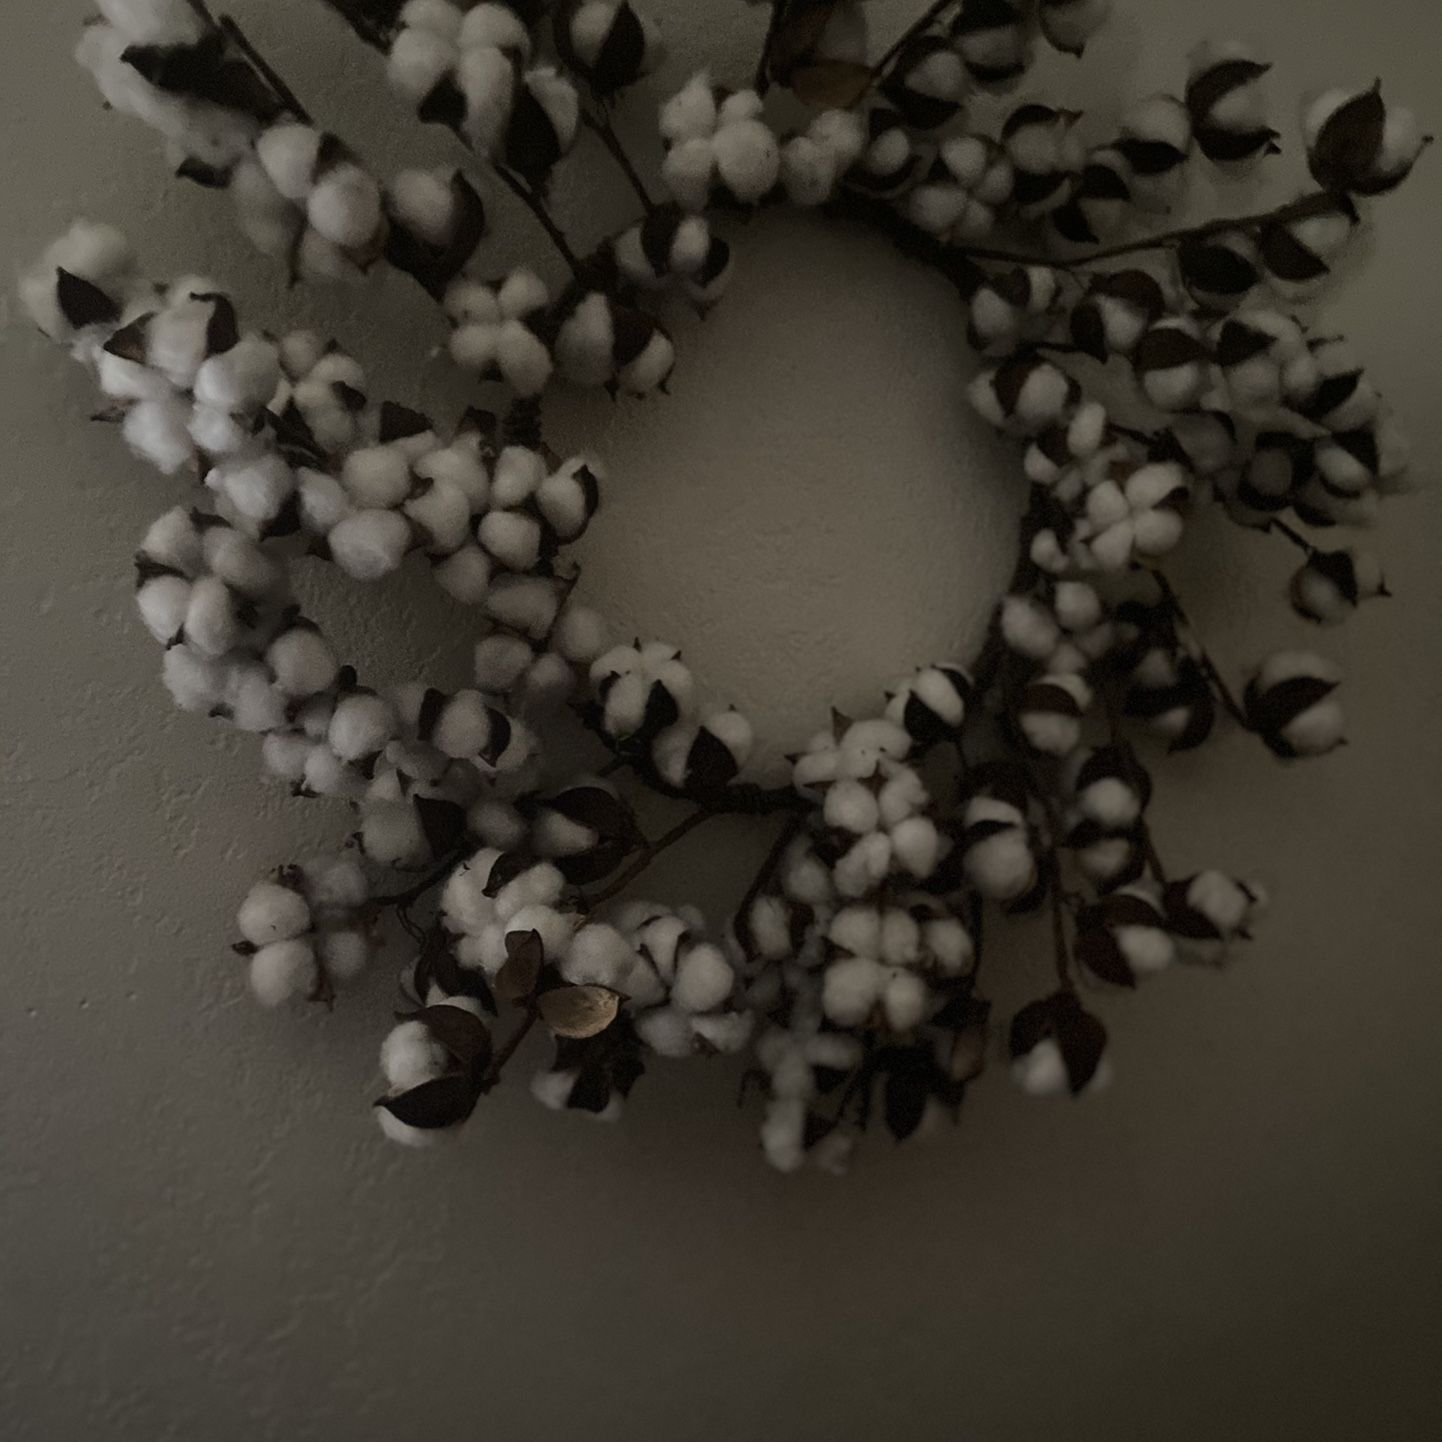 Cotton wreath